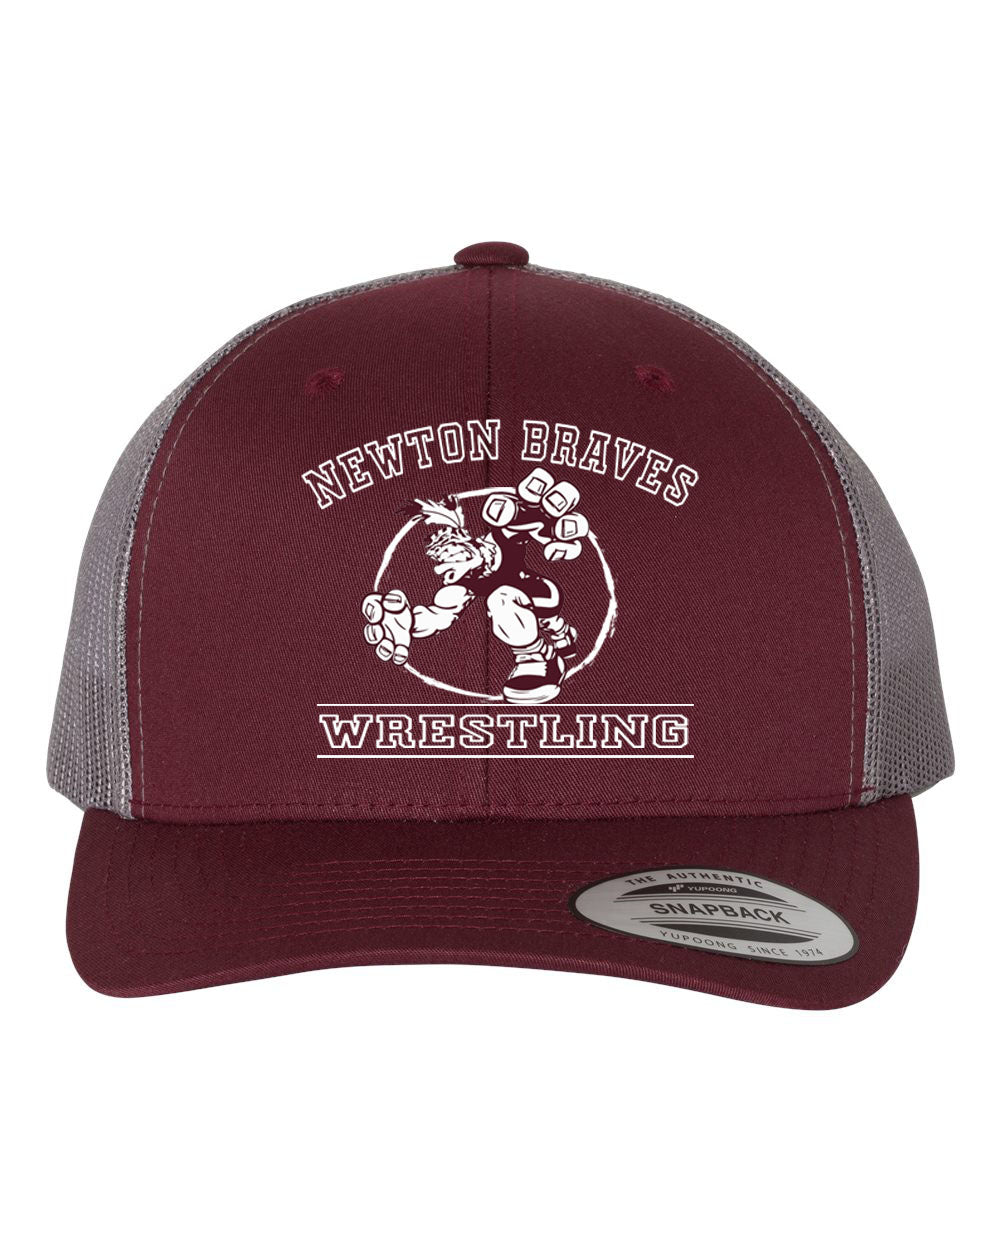 Newton Wrestling Design 8 Trucker Hat